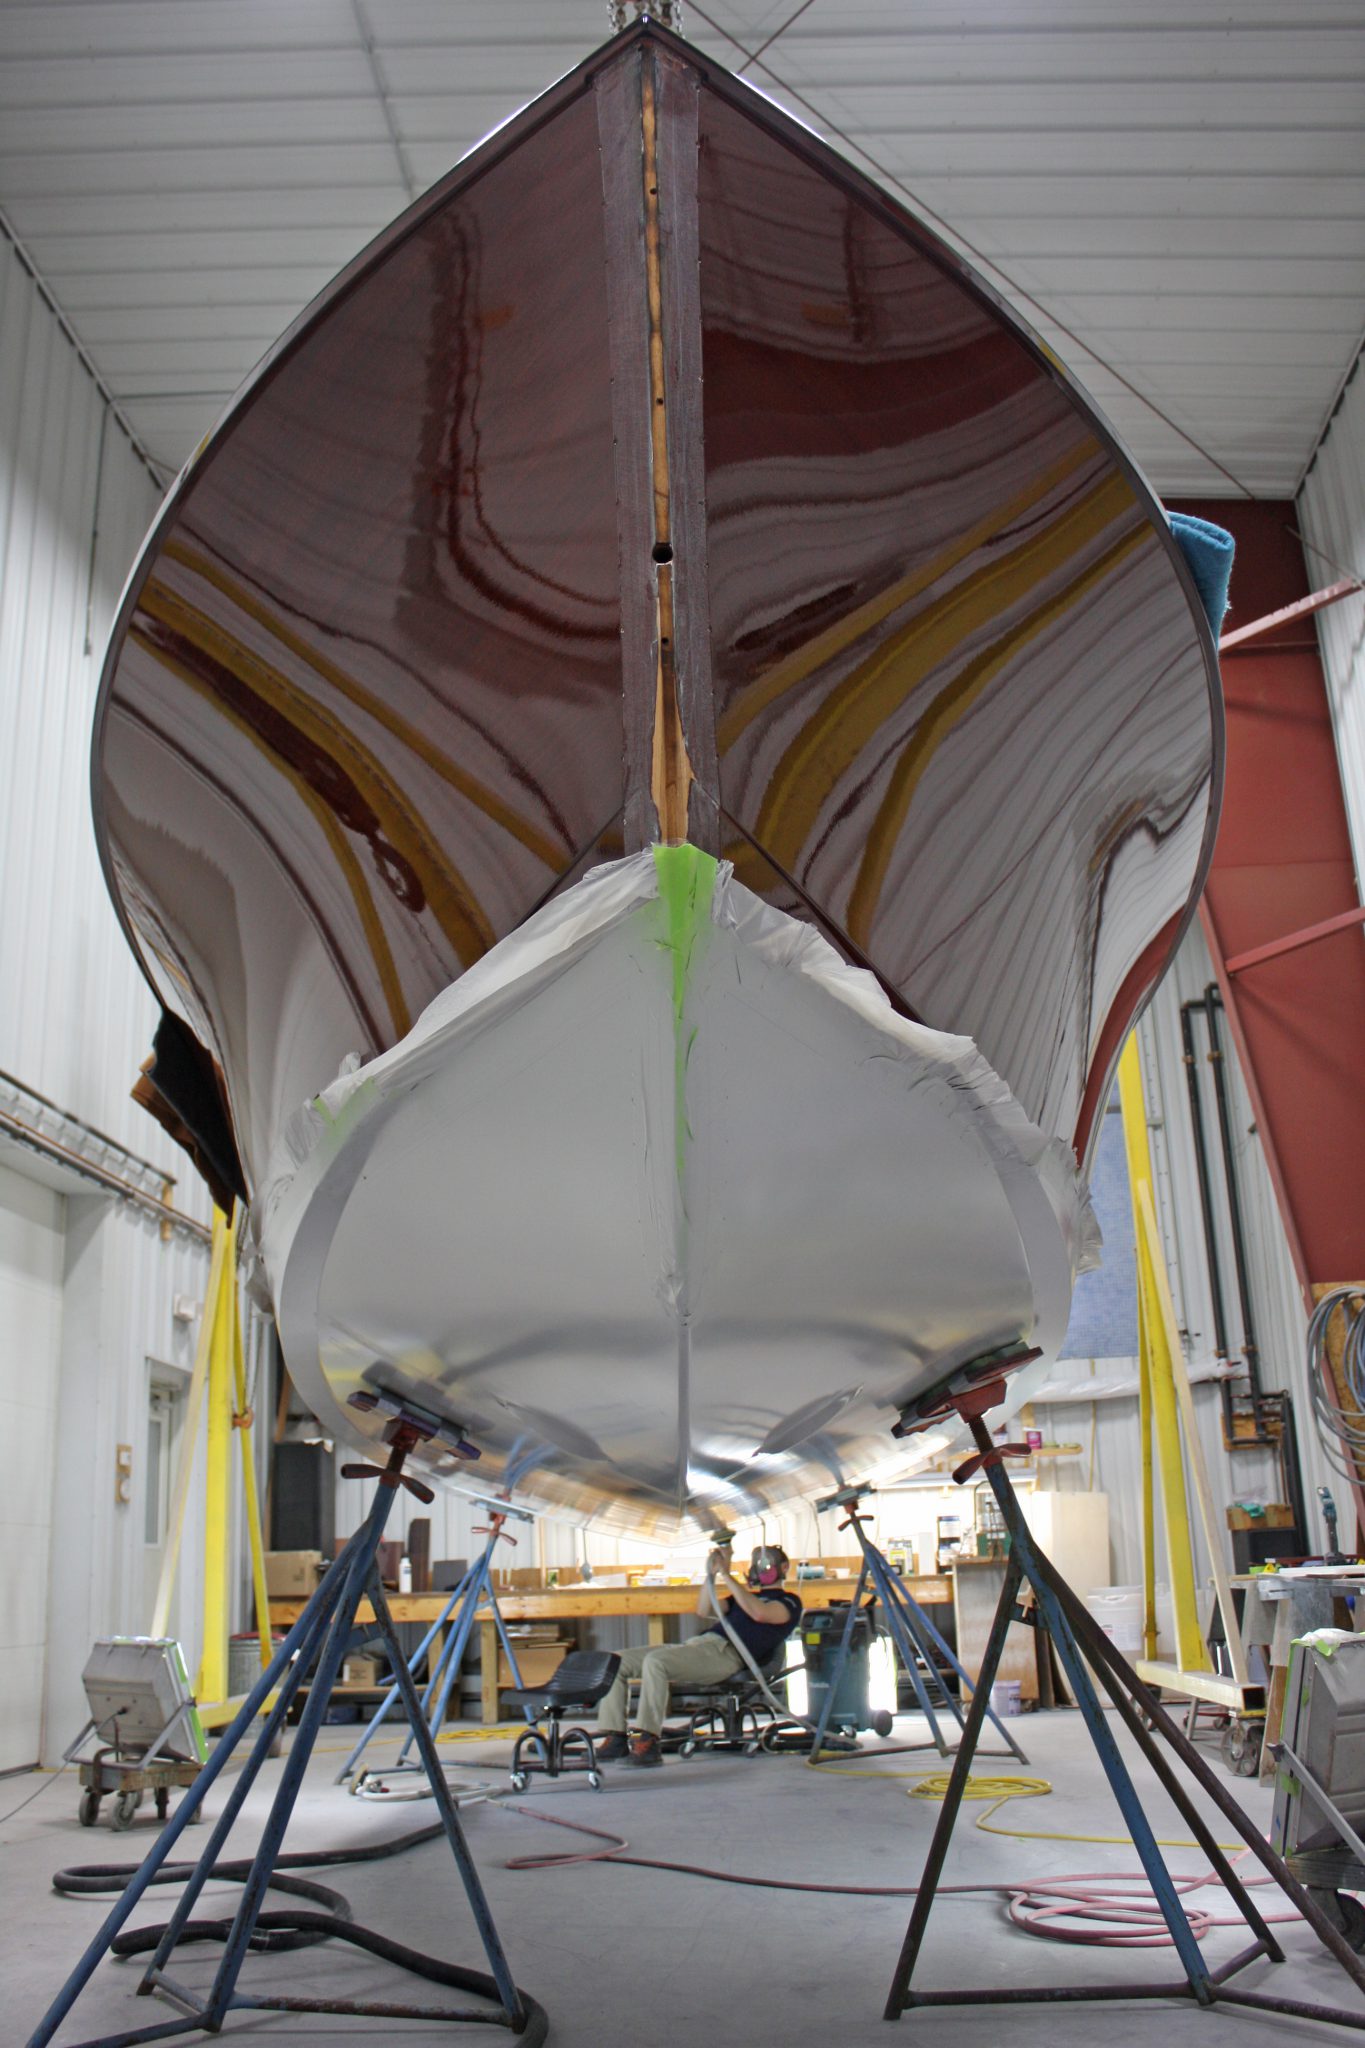 Catnip hull in paint bay